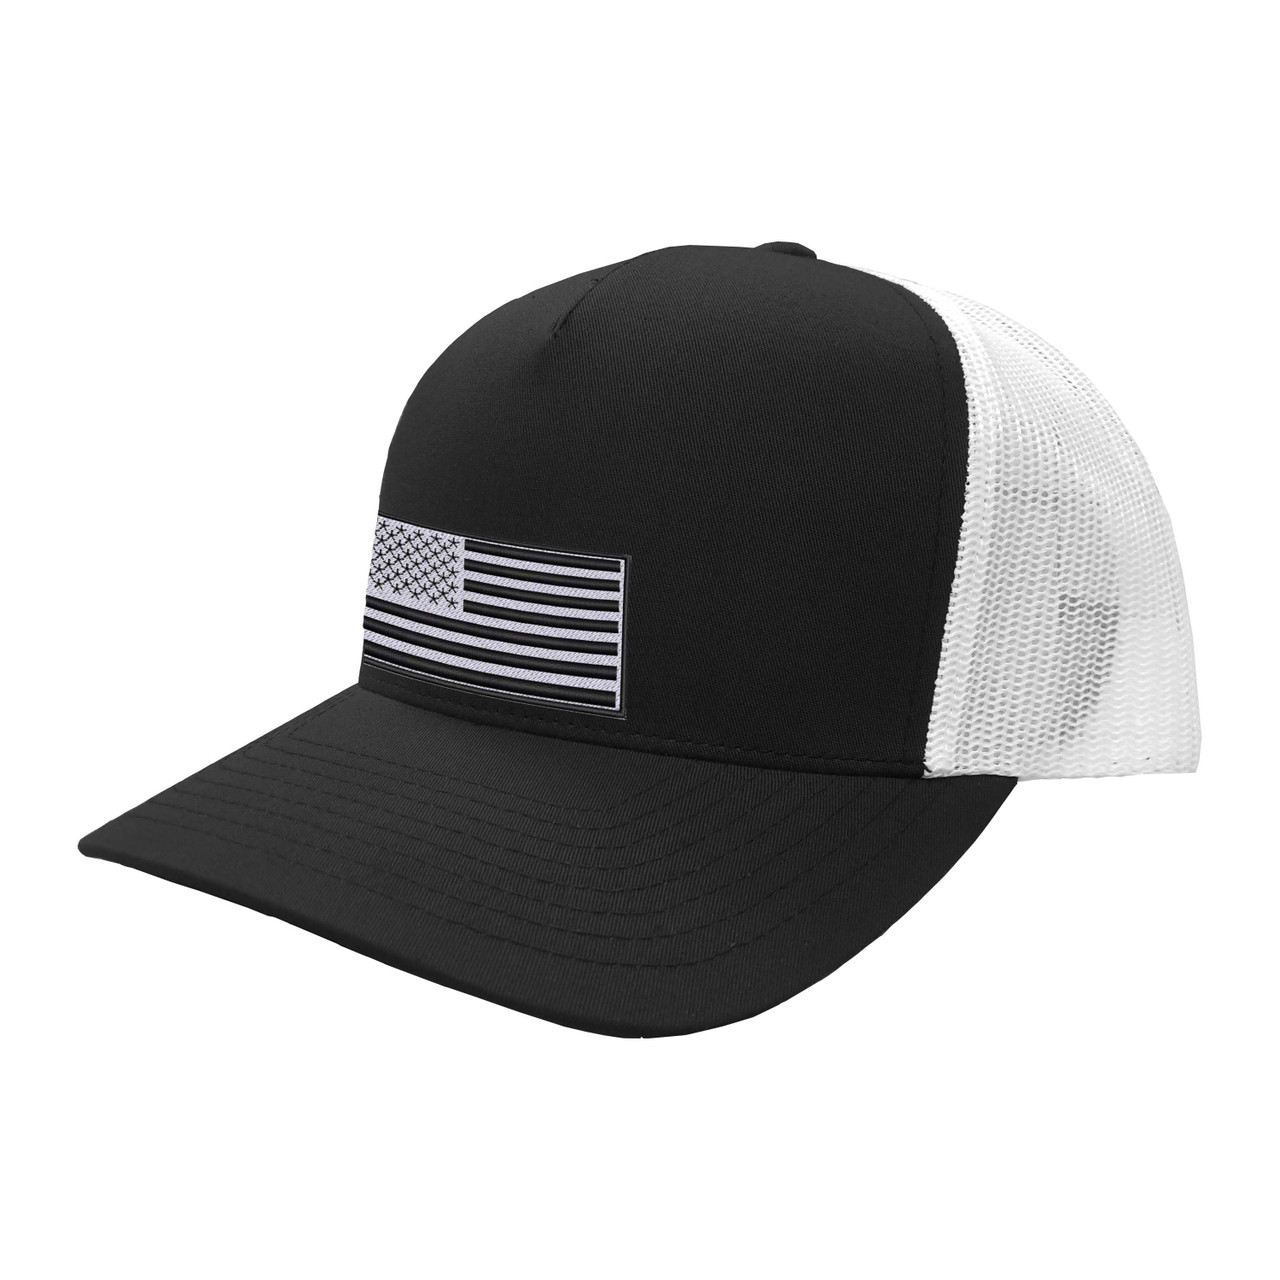 KEY American Flag Hat - Five Panel